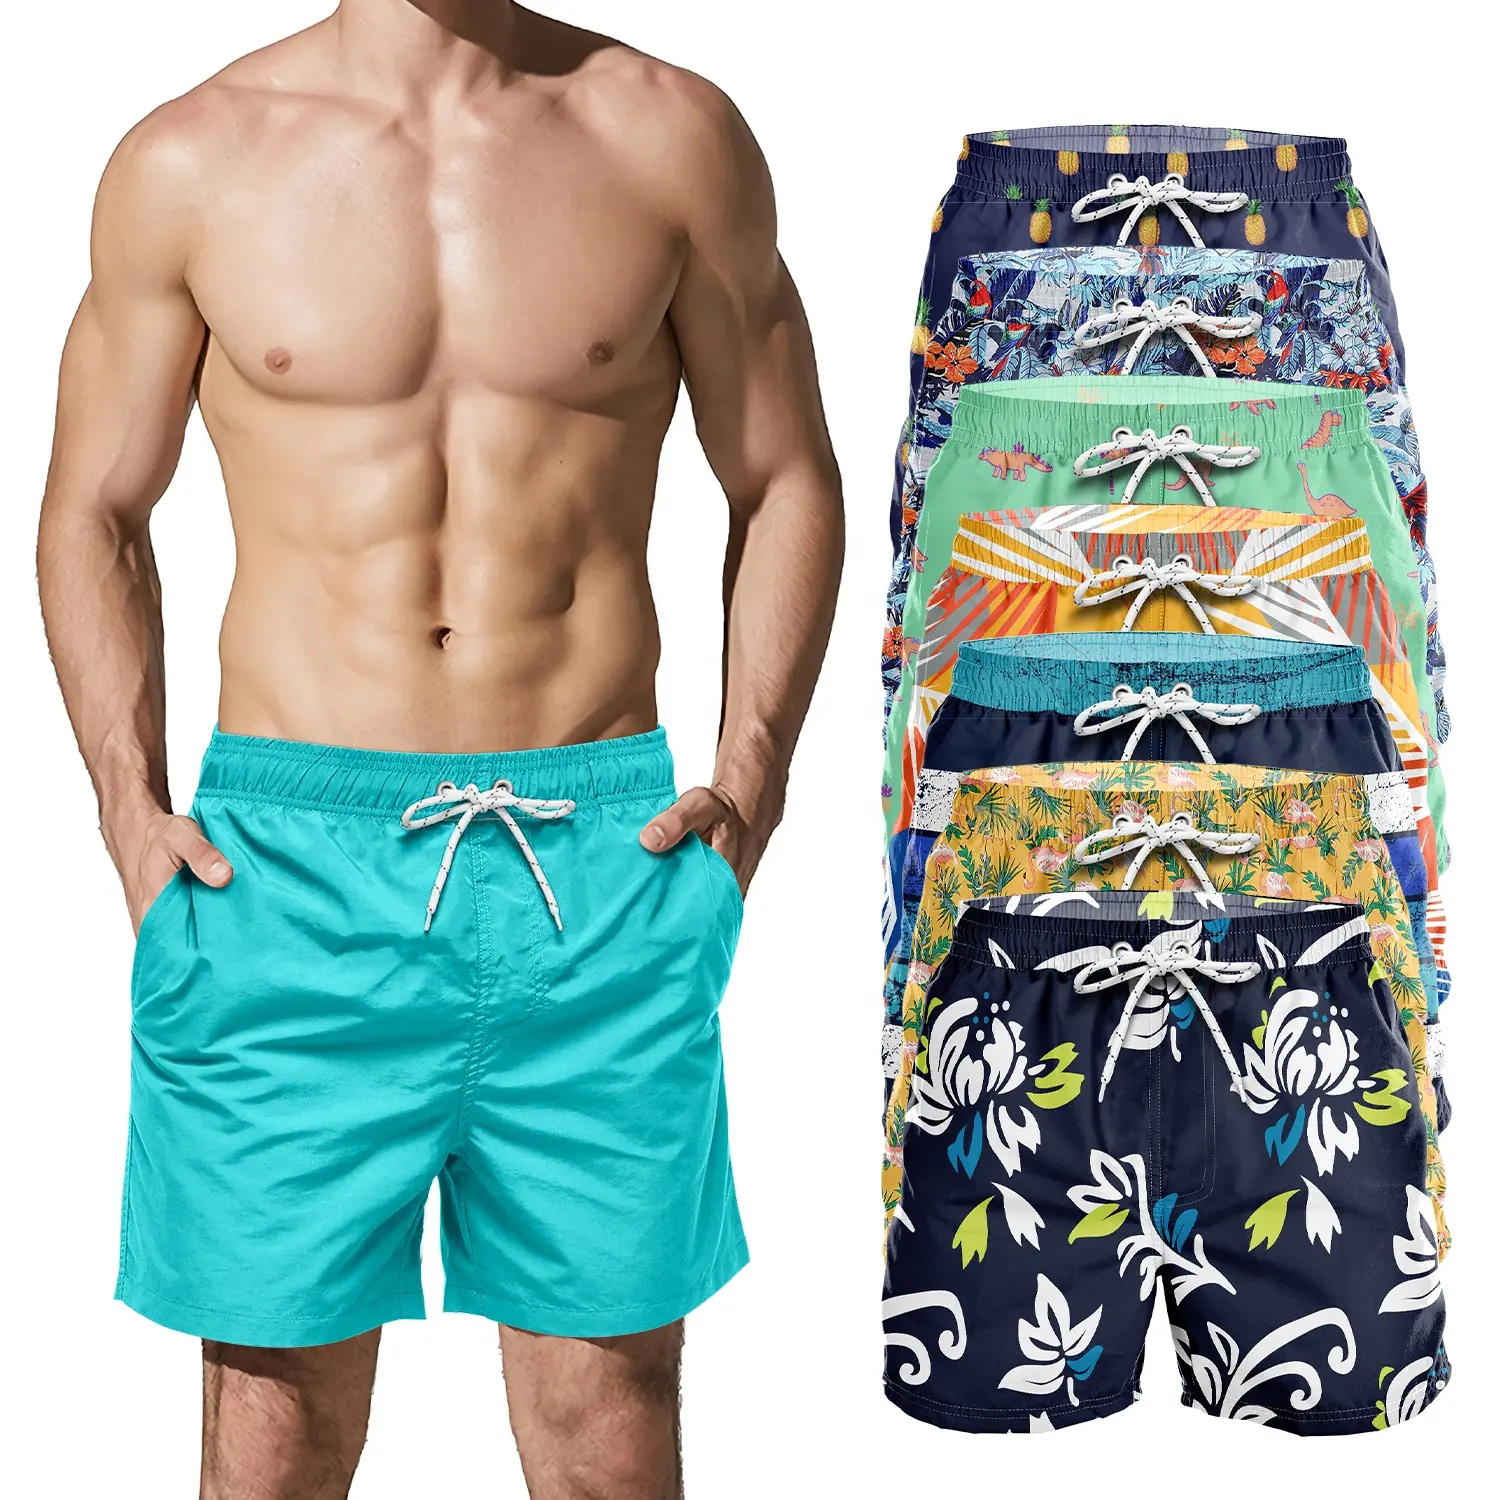 Bañadores cortos transpirables para hombre, ropa de baño de secado rápido, varios estilos, moda de verano, con poliéster